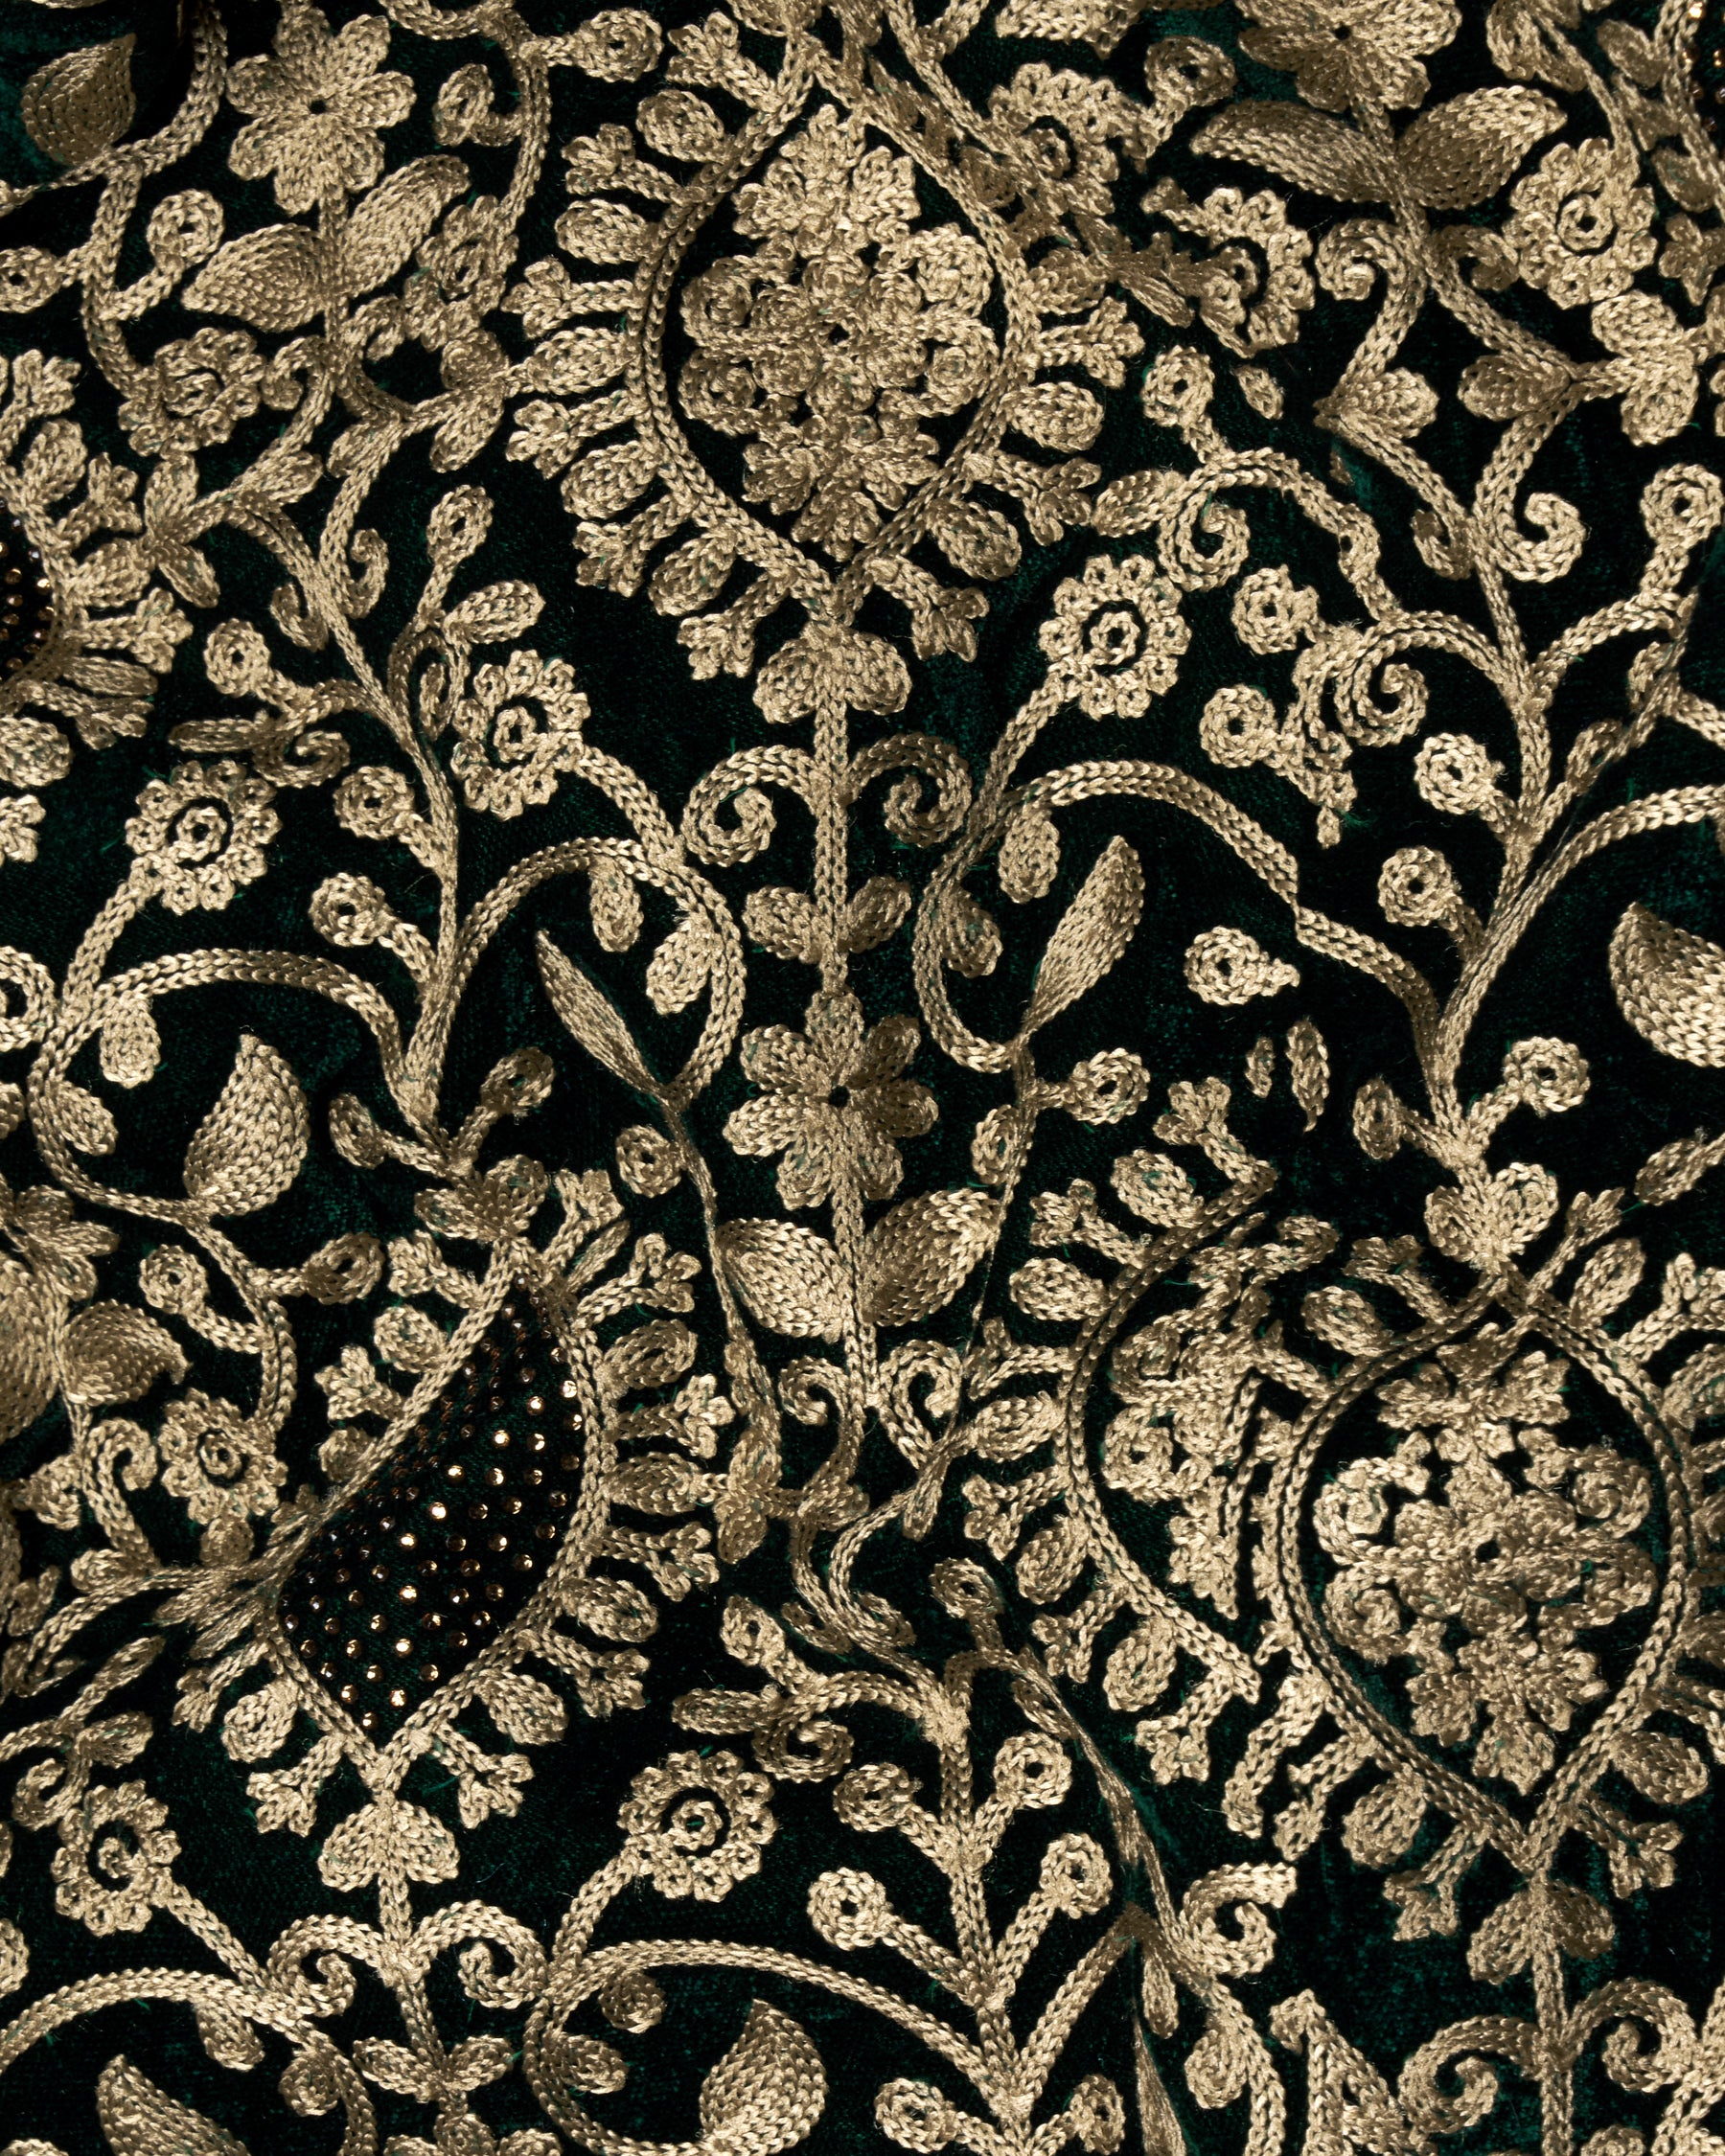 Beaver Brown with Cardin Green Diamond Work with Cotton Thread Heavy Embroidered Bandhgala Designer Indo-Western Blazer